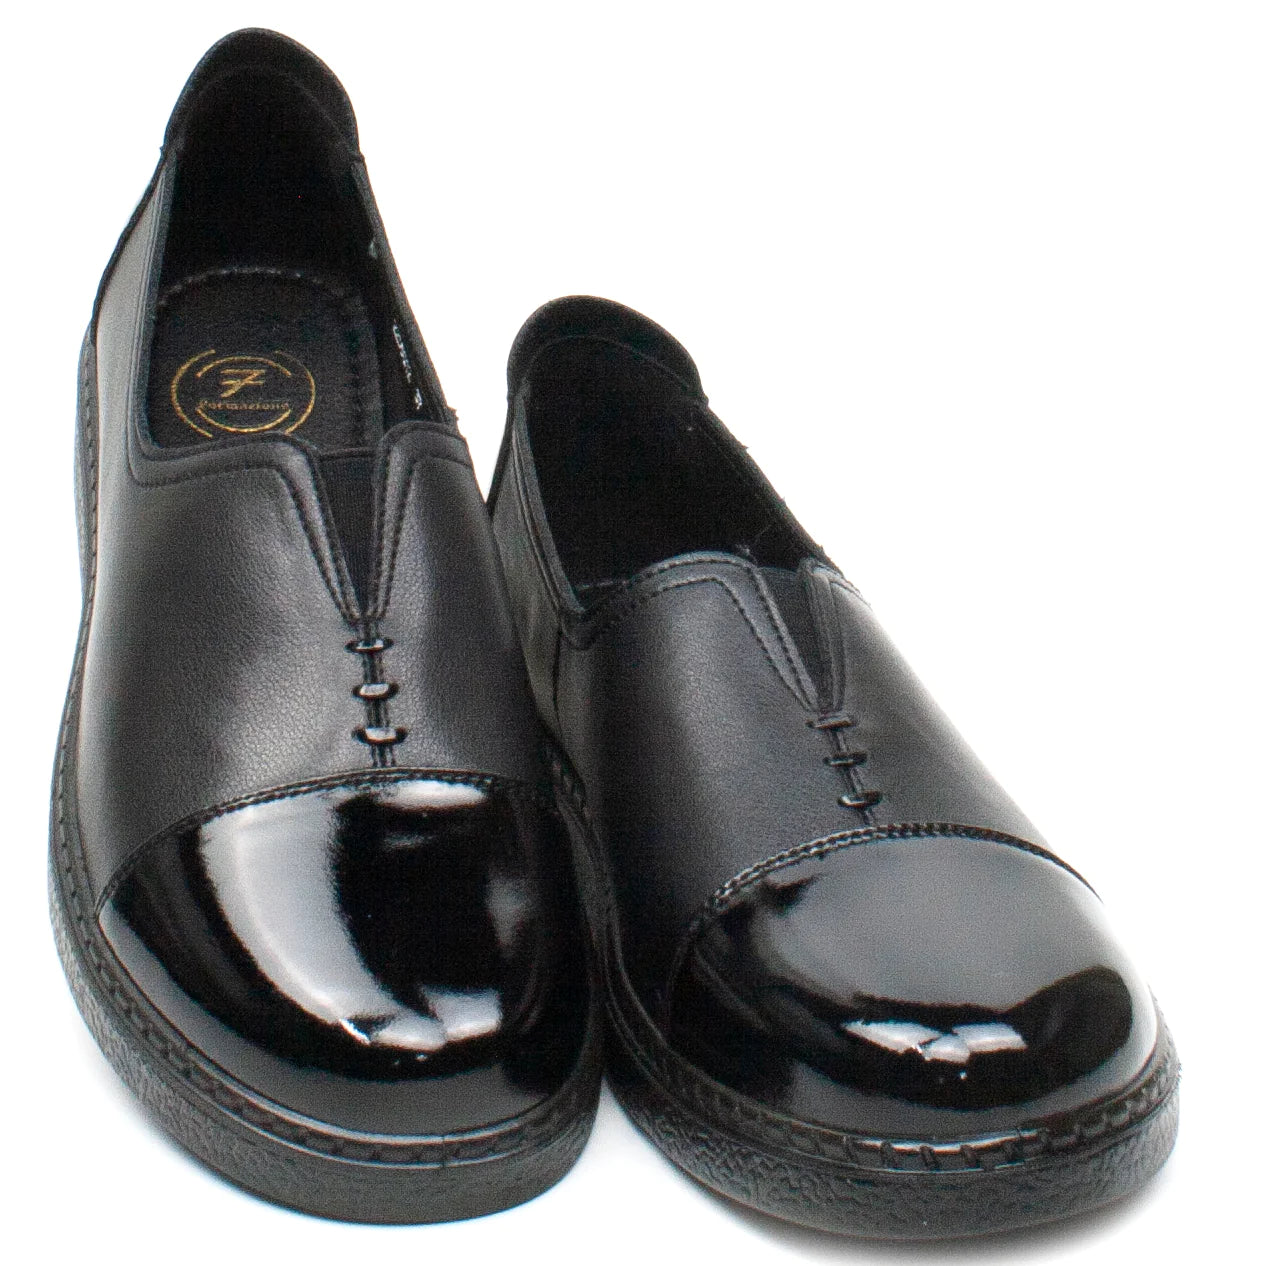 Pantofi dama casual piele naturala Q12 negru